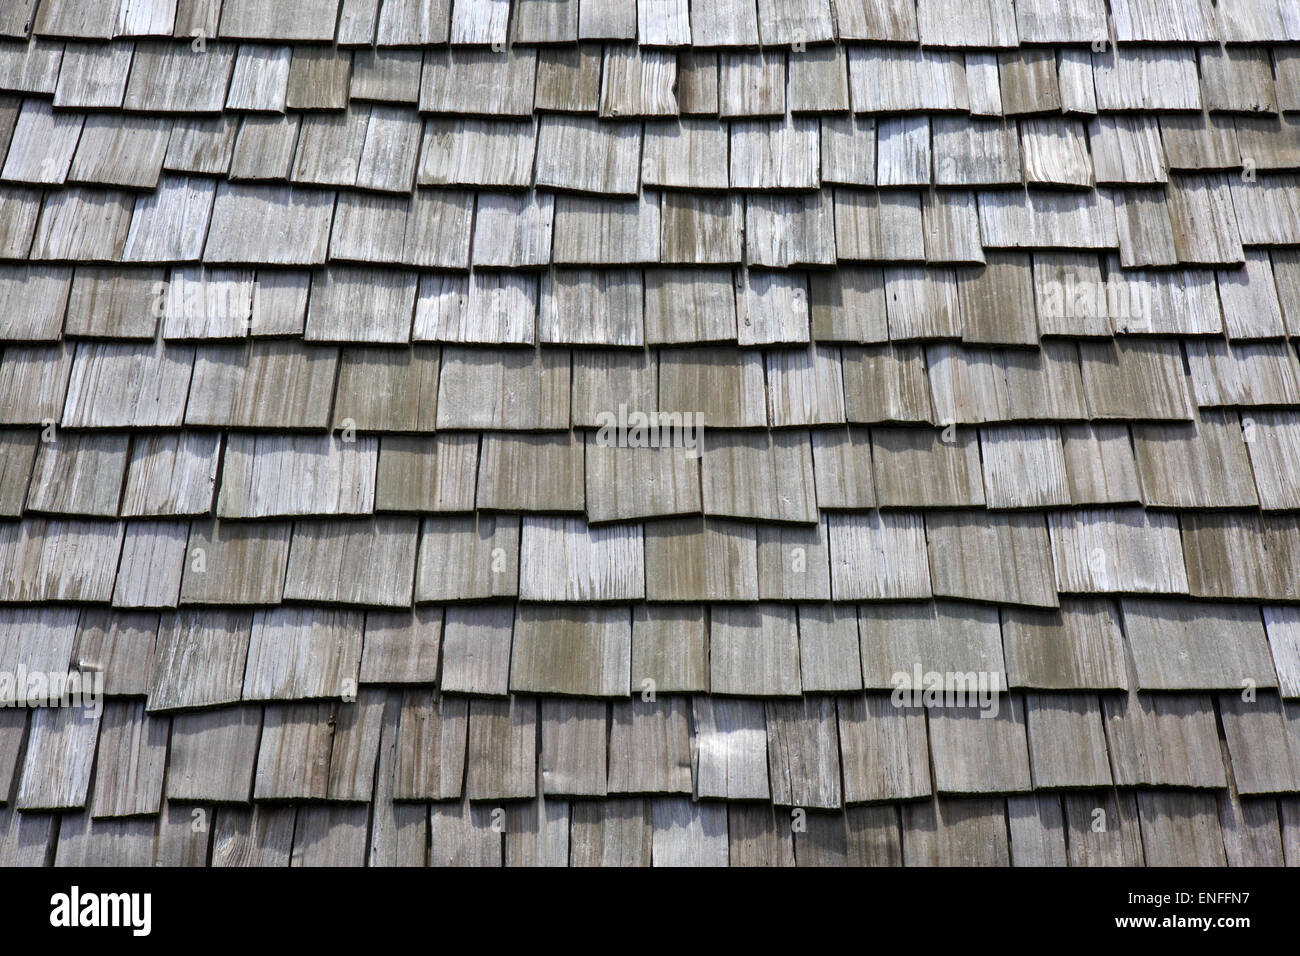 Wood roof shingles Stock Photo